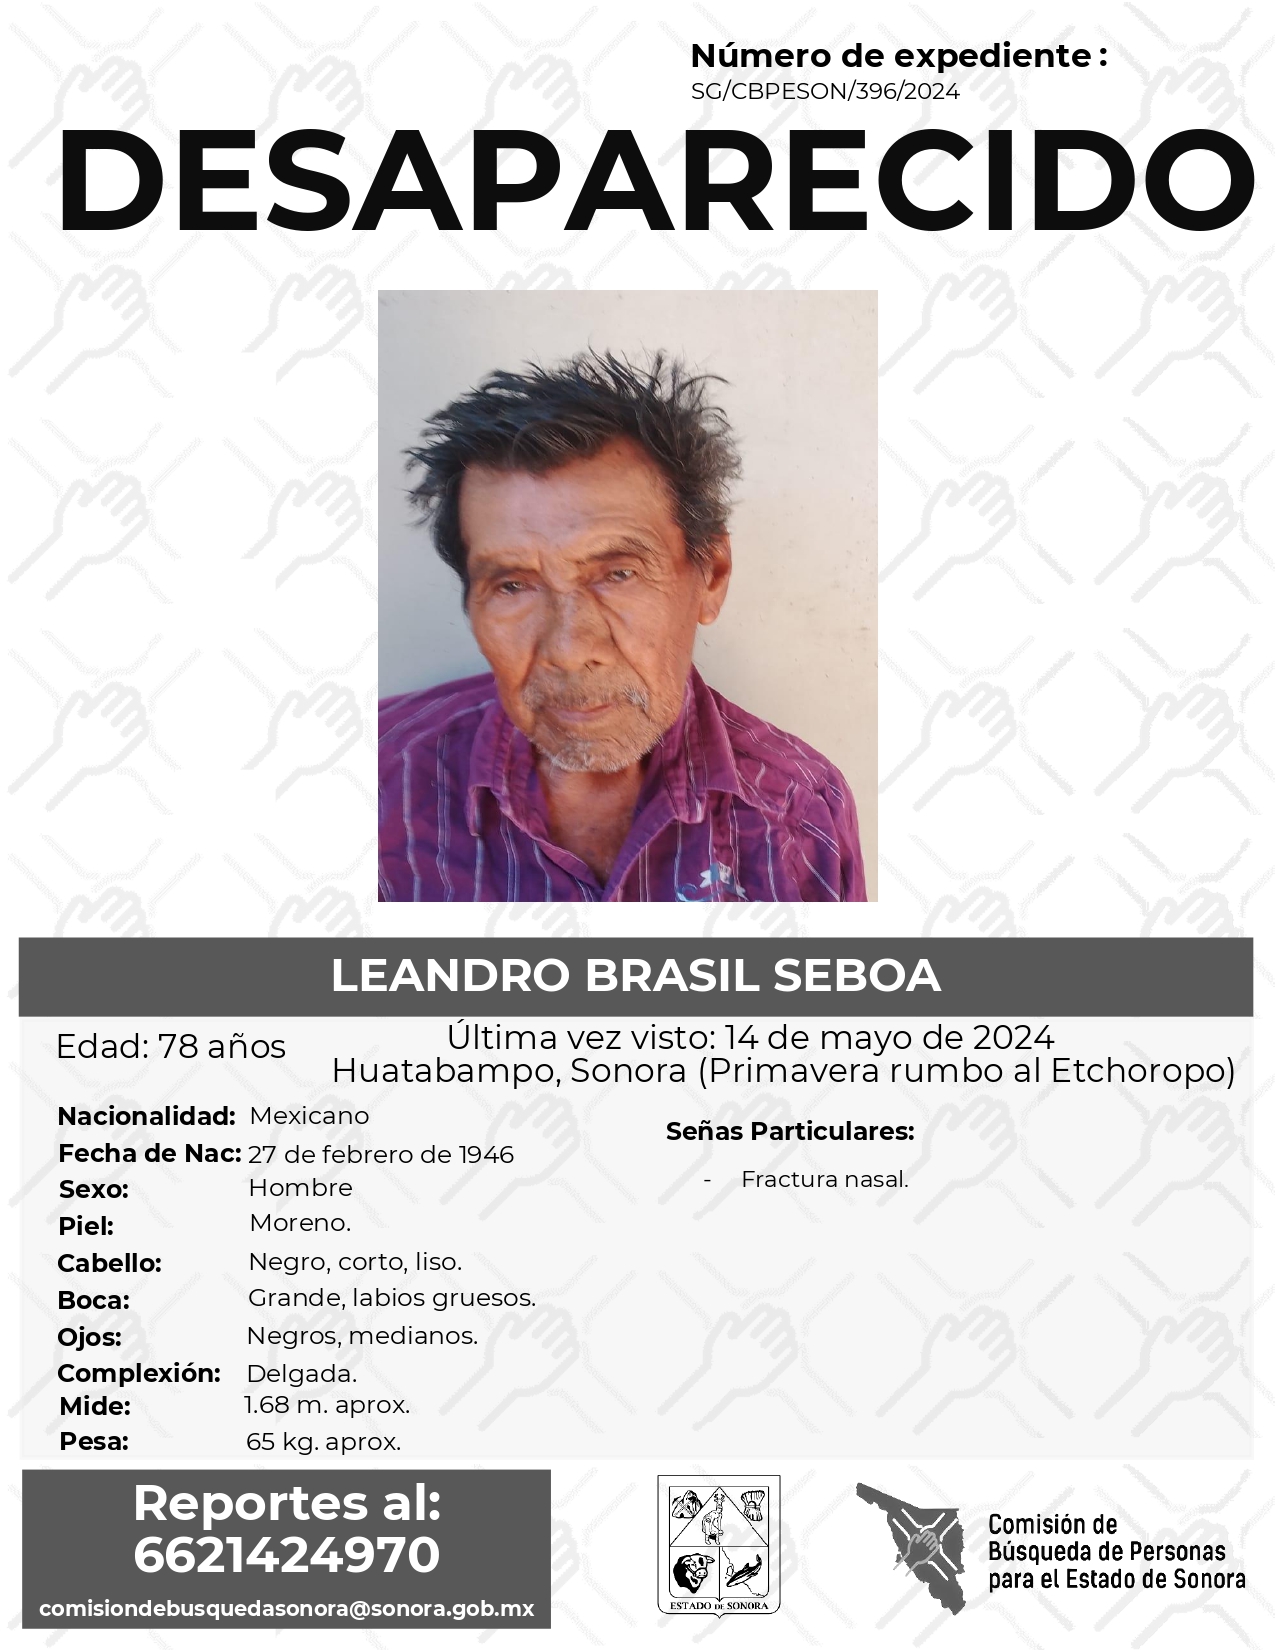 LEANDRO BRASIL SEBOA - DESAPARECIDO